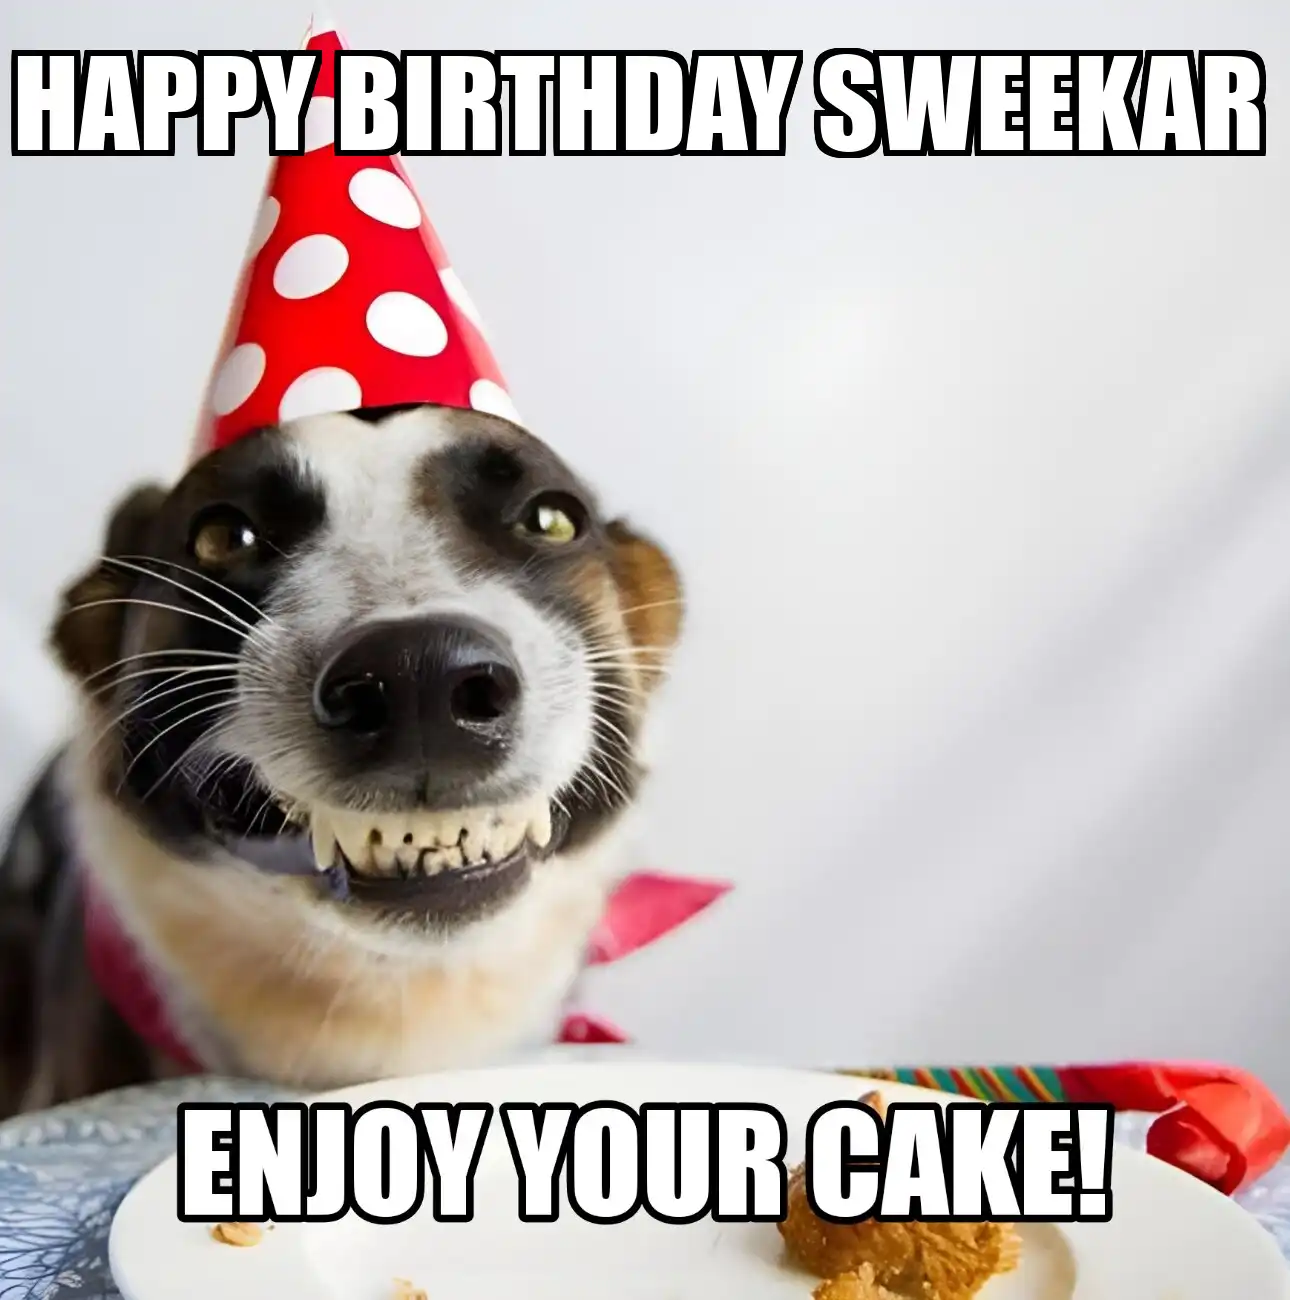 Happy Birthday Sweekar Enjoy Your Cake Dog Meme